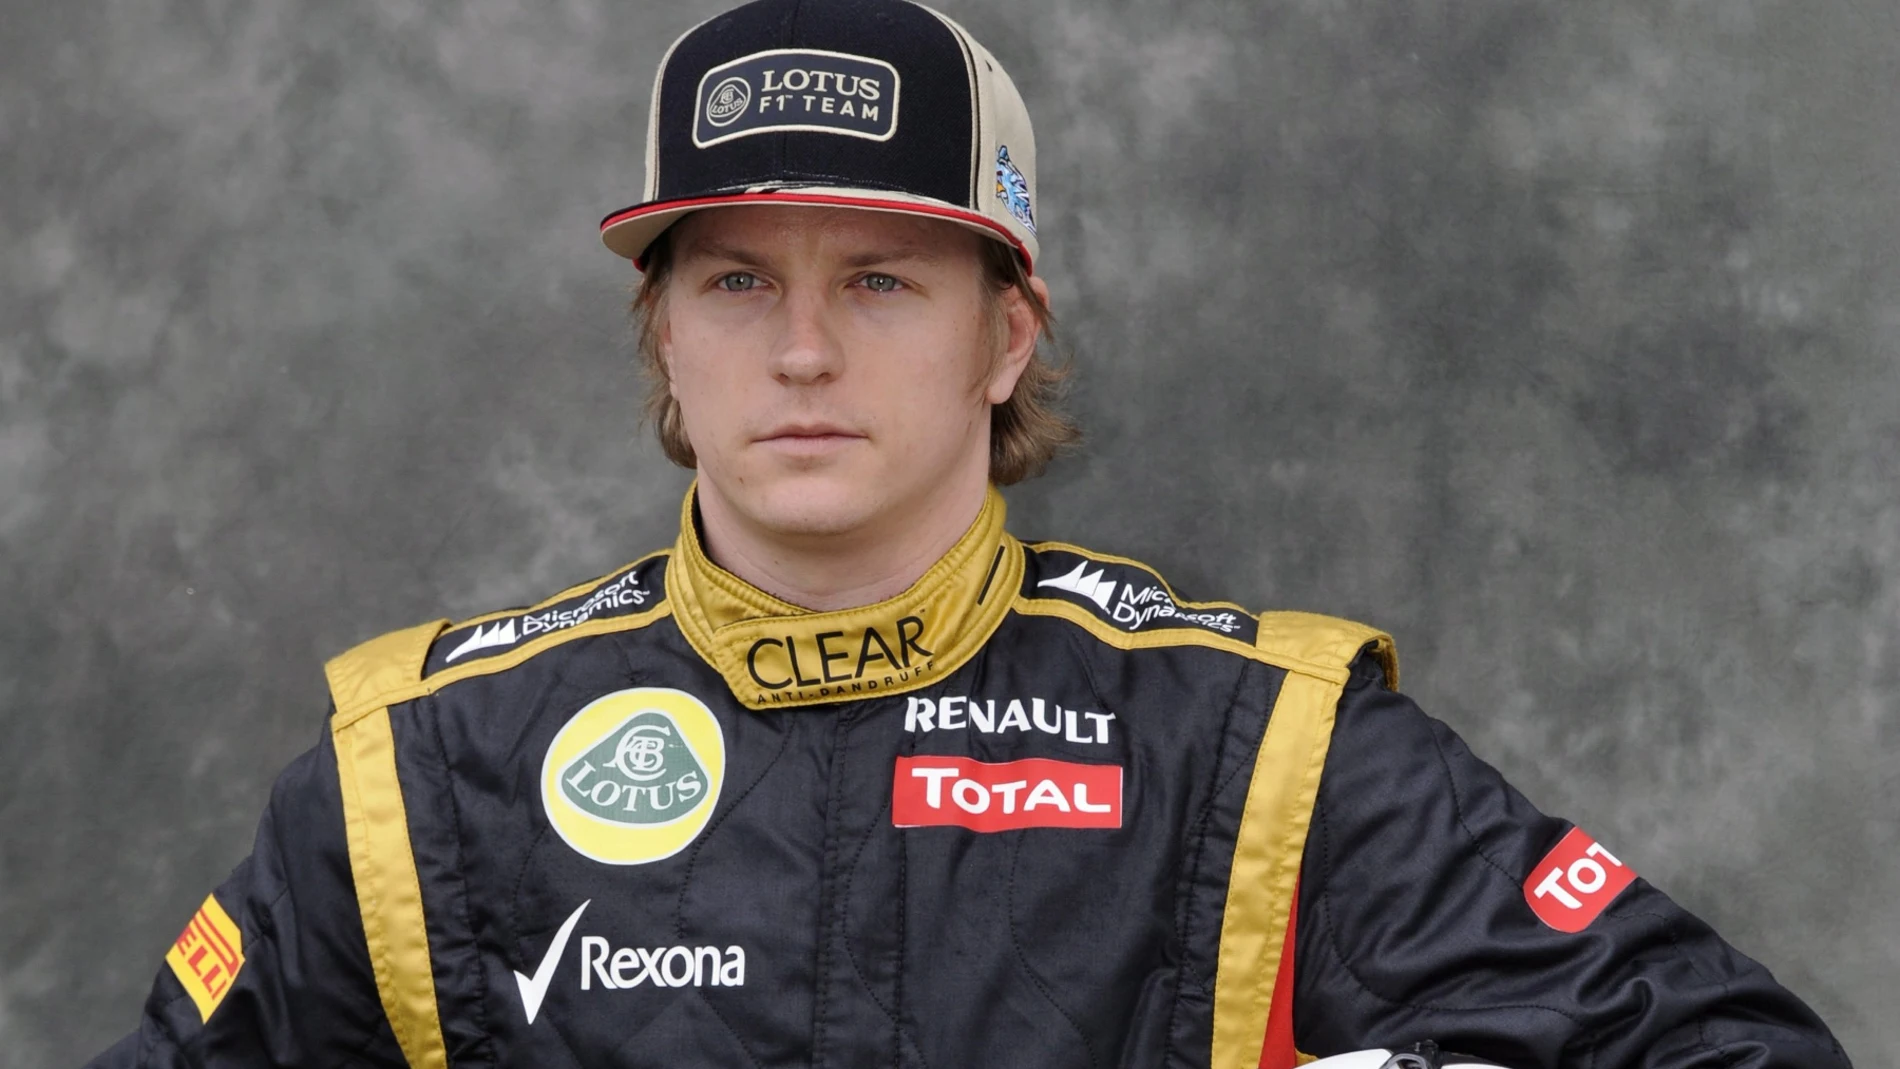 El piloto finlandés de Fórmula 1 Kimi Raikkonen